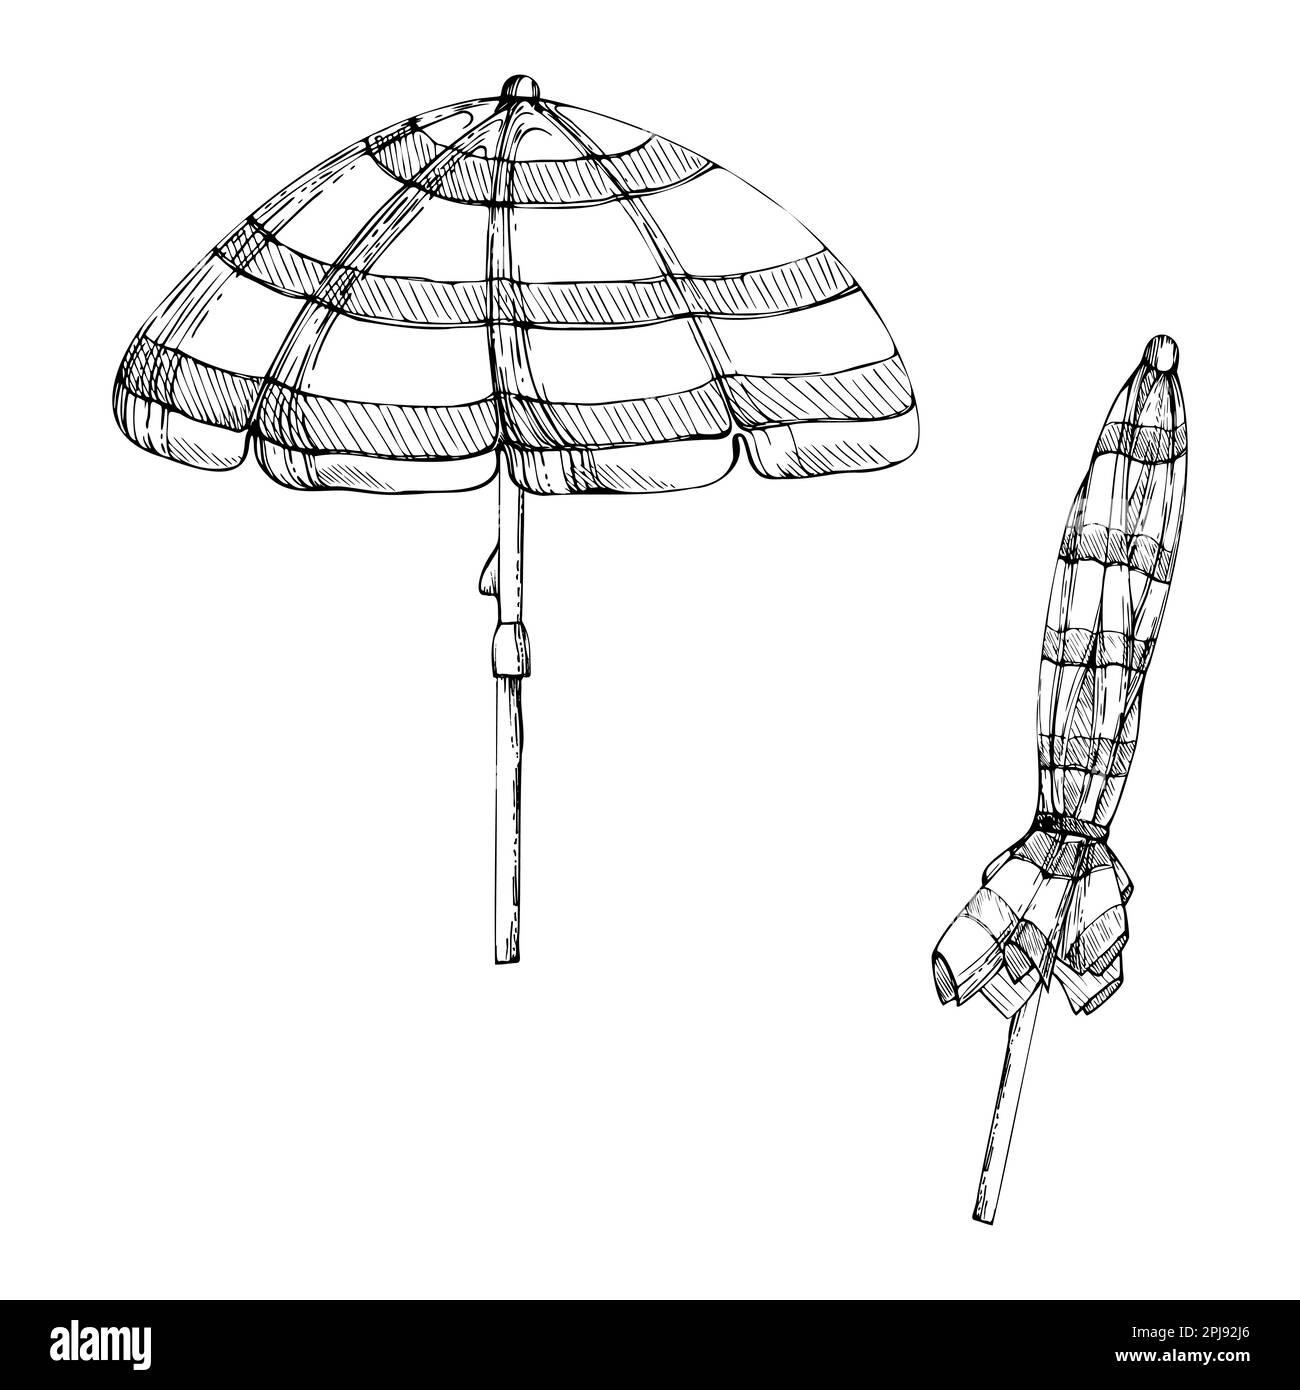 Beach Umbrella Watercolor Hand Drawn Sketch Top View Vector Illustration  Stock Vector by ©ajjjgul 389033140